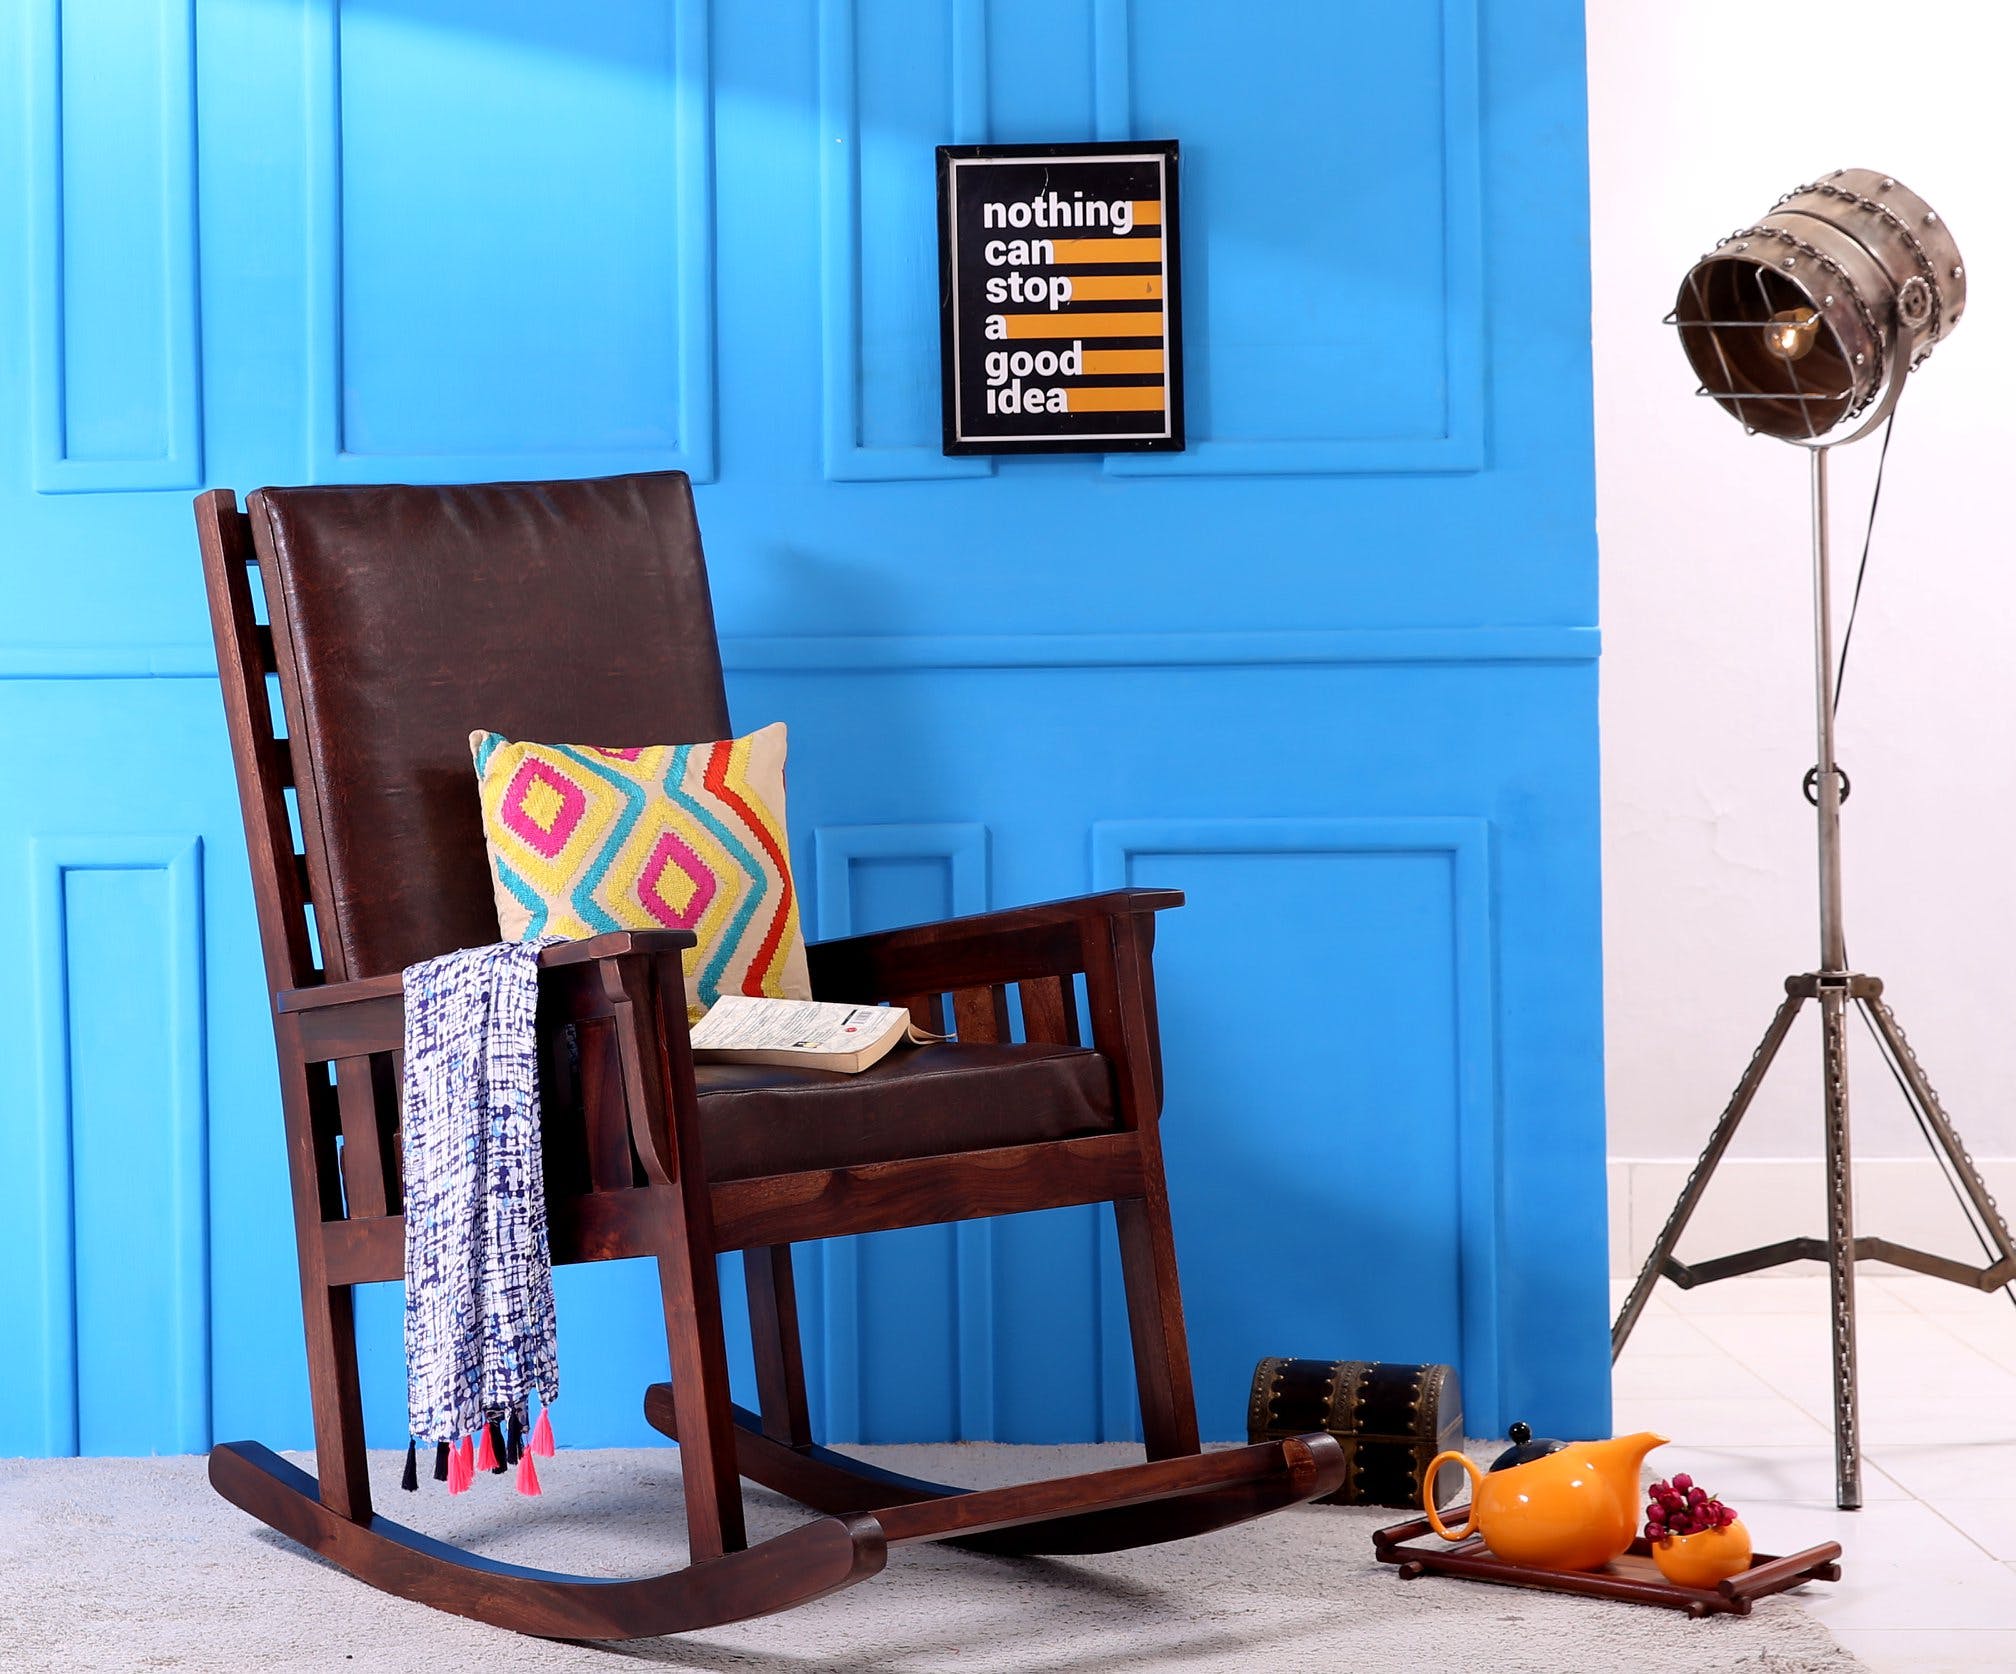 Furniture,Blue,Room,Chair,Rocking chair,Yellow,Orange,Interior design,Lamp,Table